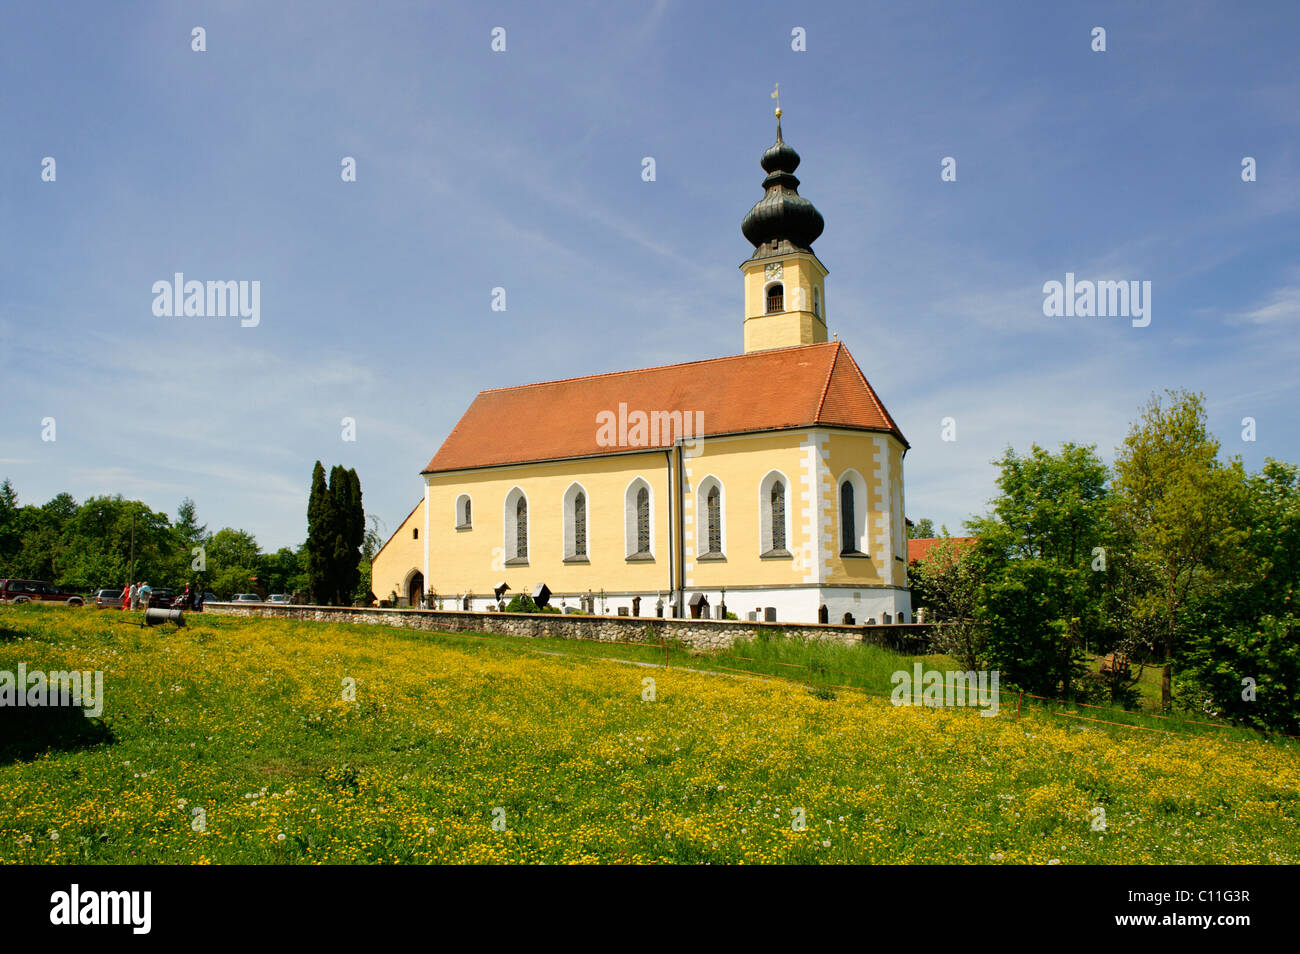 Frauenried église Mariae Geburt, près de Passau, Upper Bavaria, Germany, Europe Banque D'Images